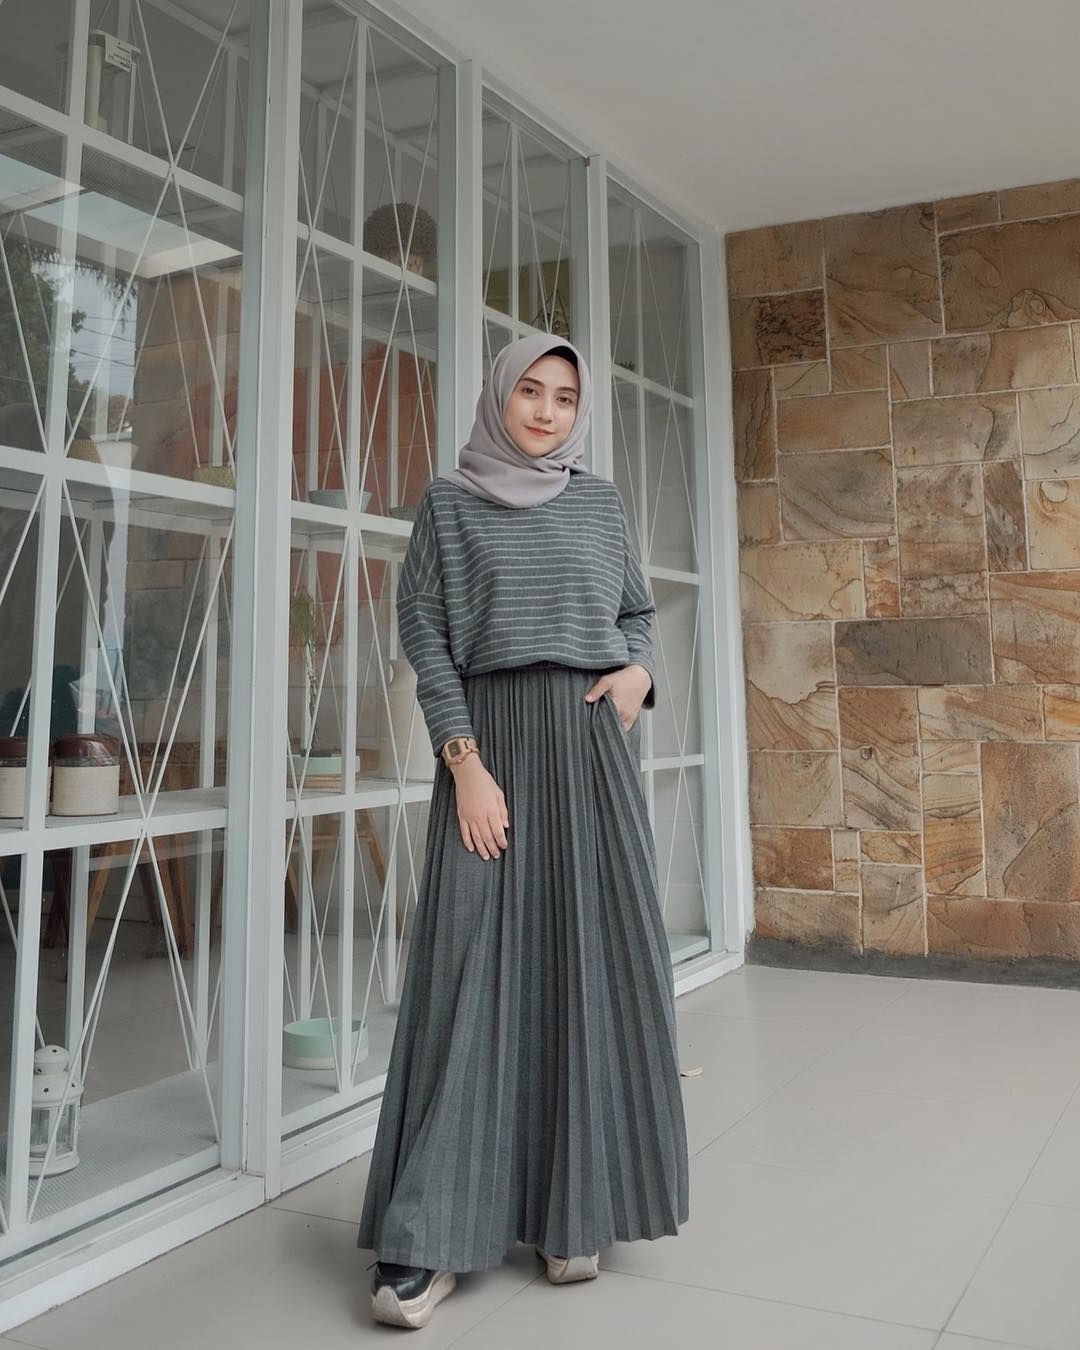 Model Motif Baju Lebaran 2019 9ddf Baju Muslim Lebaran Terbaru 2019